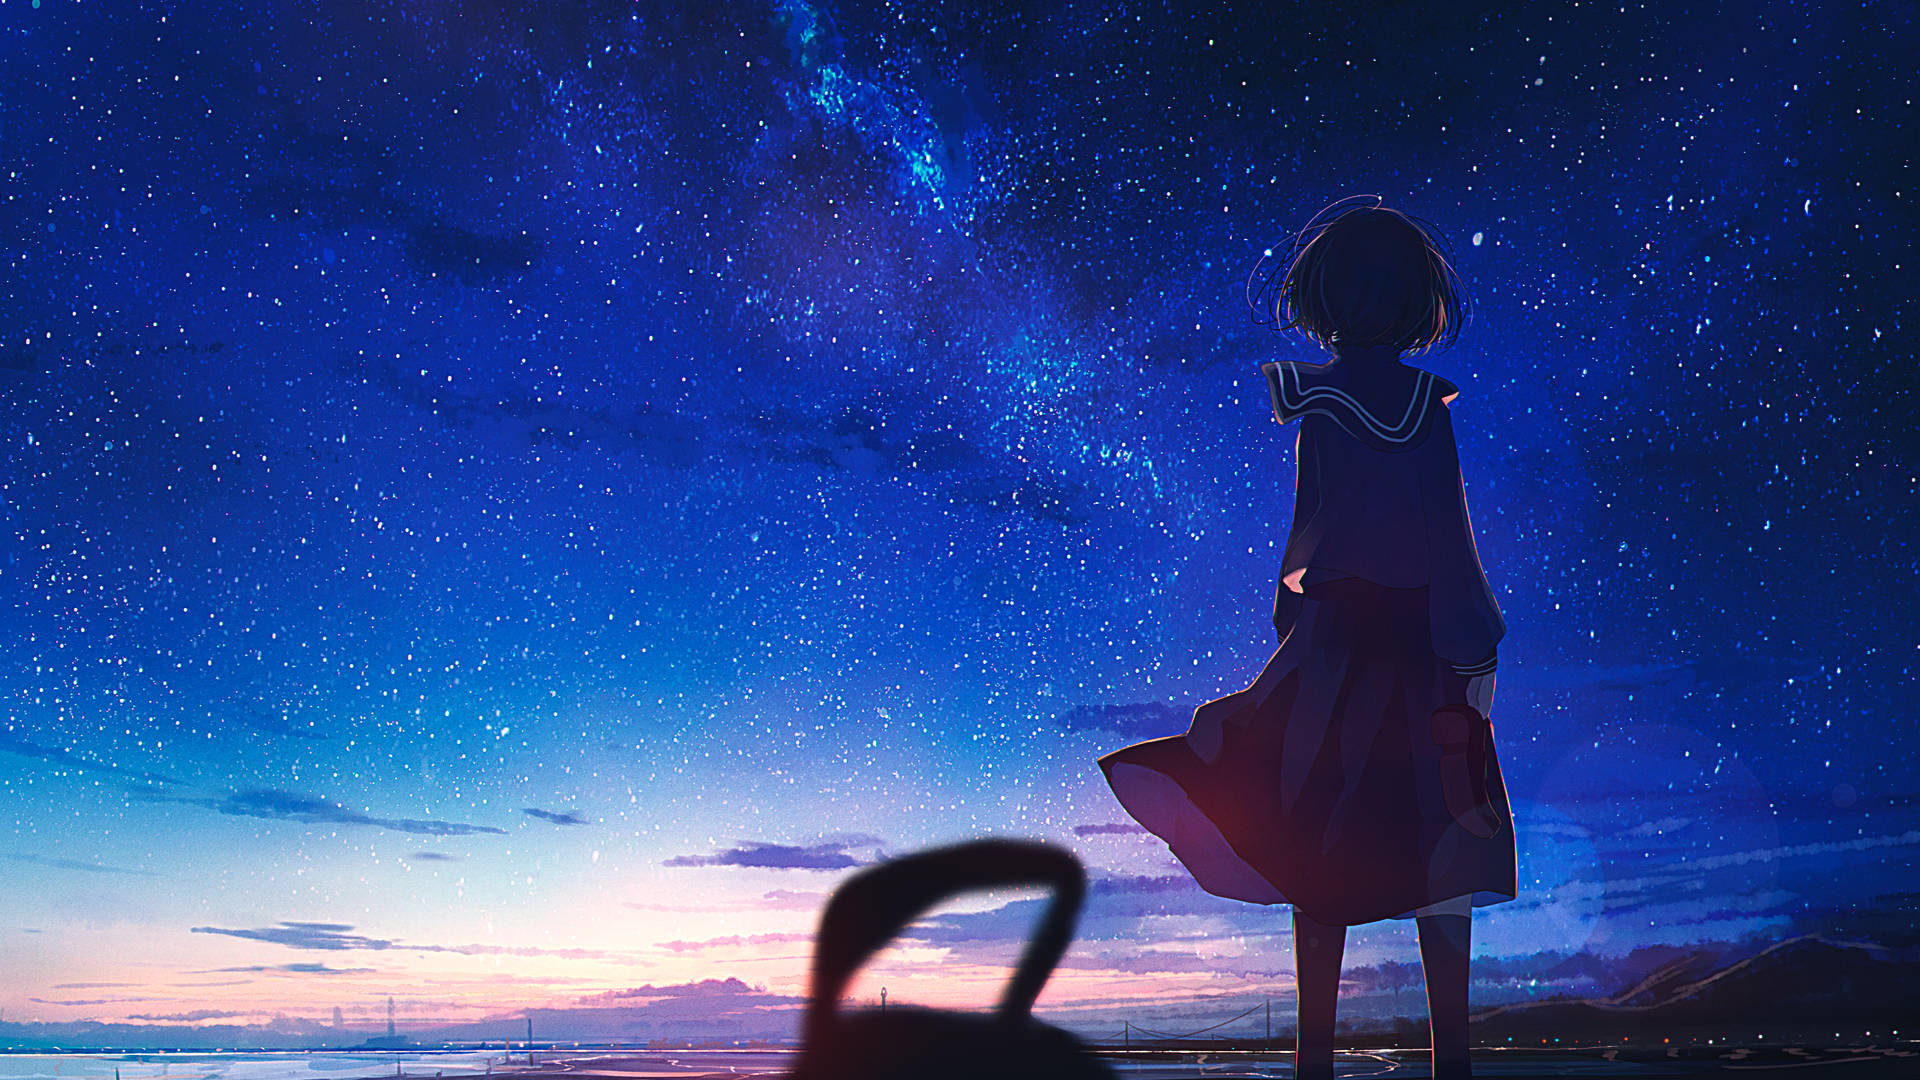 Anime Night Sky With Girl Wallpaper